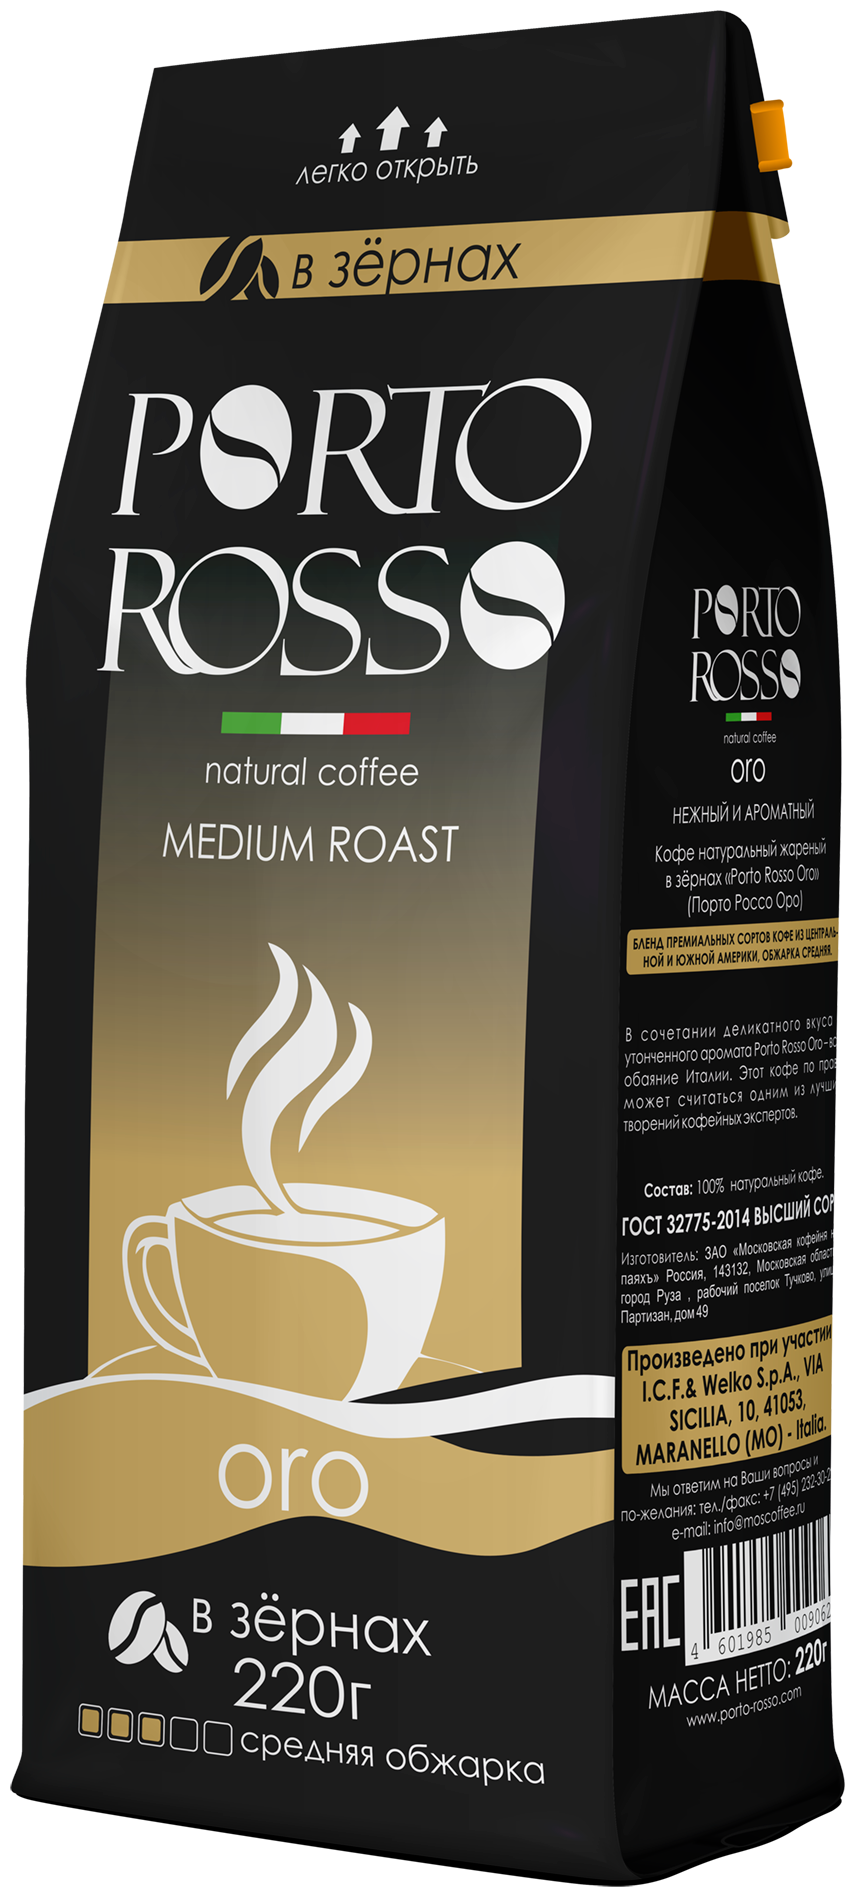 Кофе в зернах Porto Rosso oro 220 г